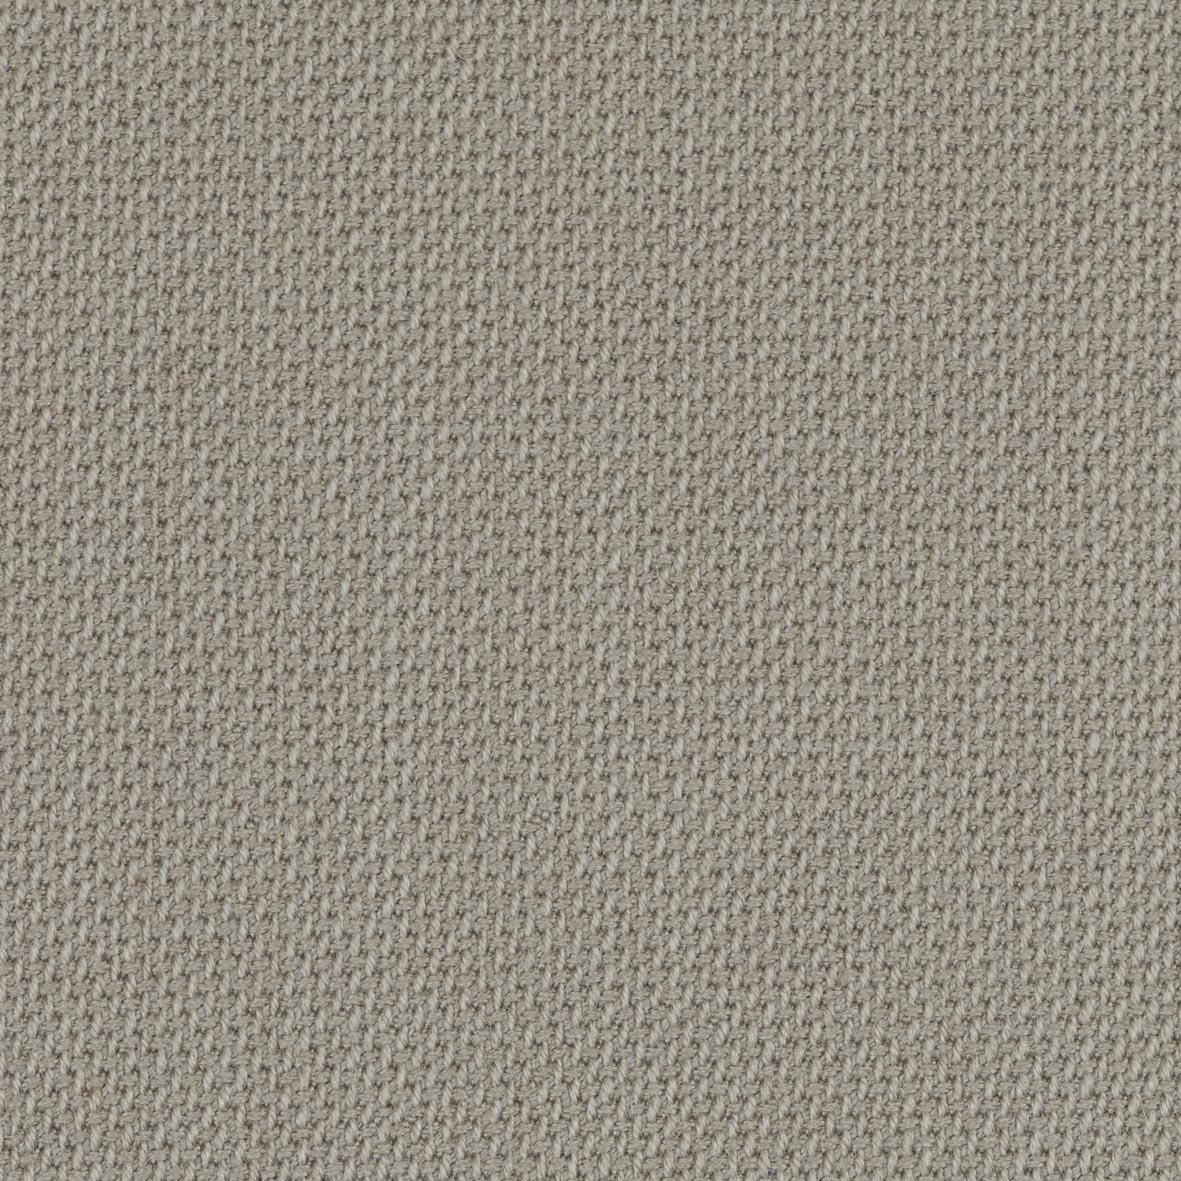 BÜROHOCKER Wollmischung Weiß, Hellgrau  - Hellgrau/Weiß, Basics, Textil/Metall (55/45,66/55cm) - Aeris